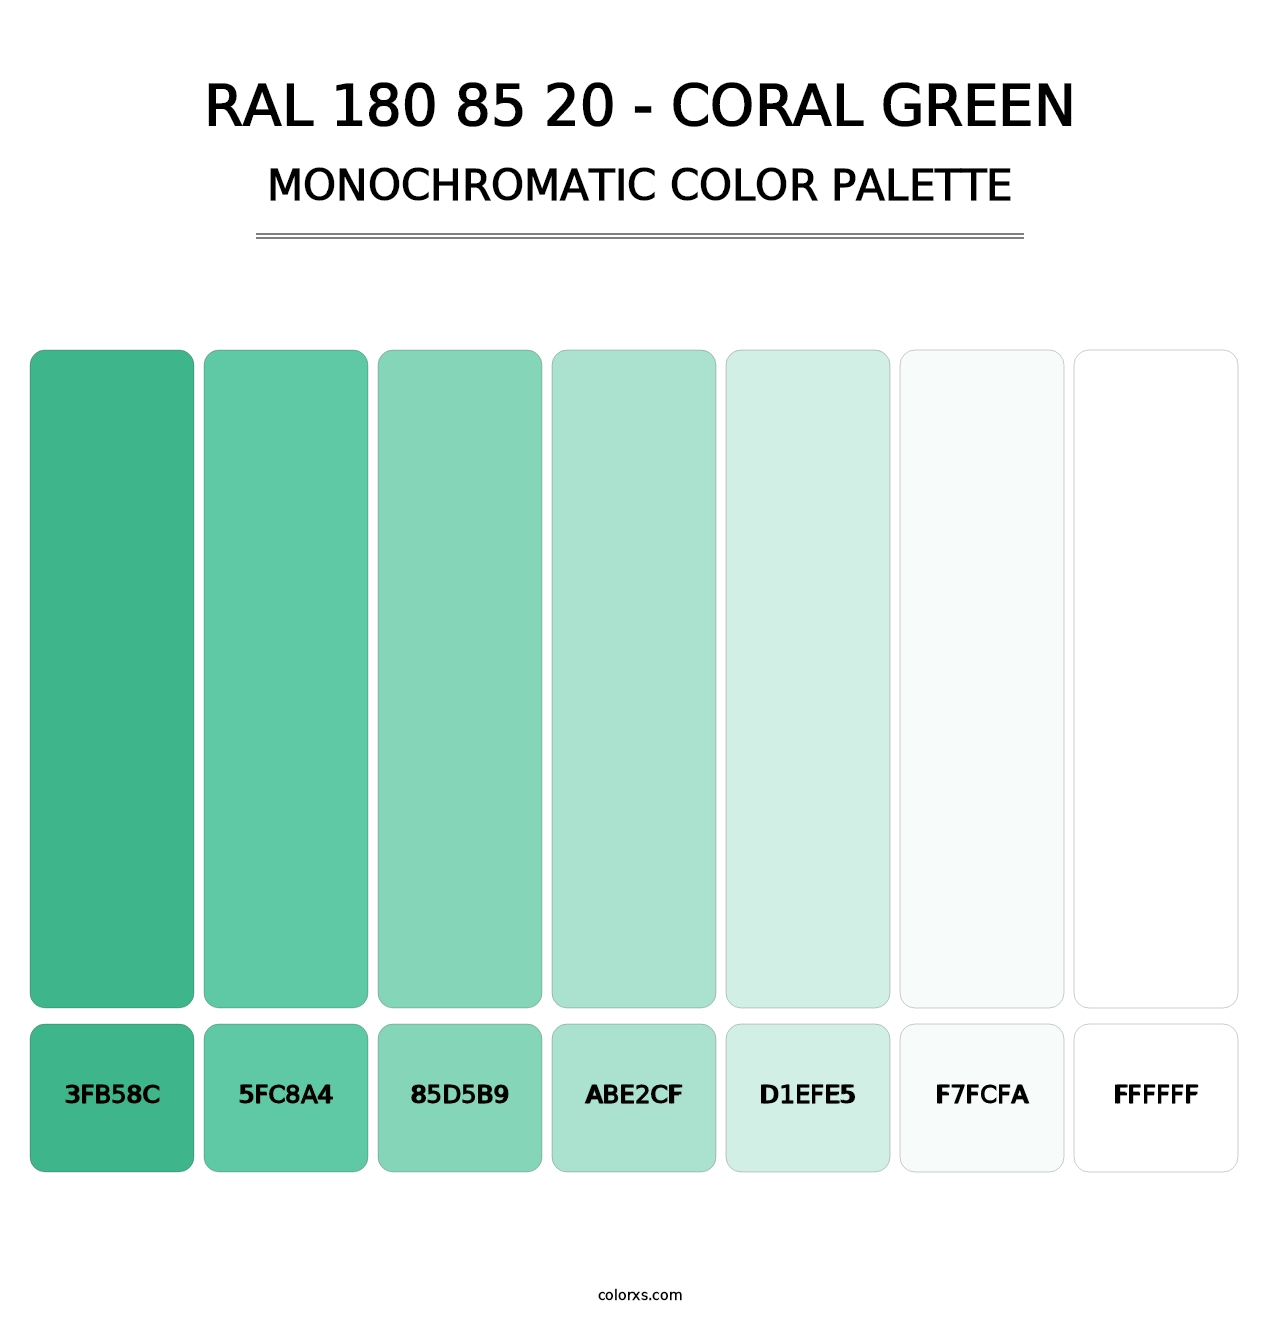 RAL 180 85 20 - Coral Green - Monochromatic Color Palette